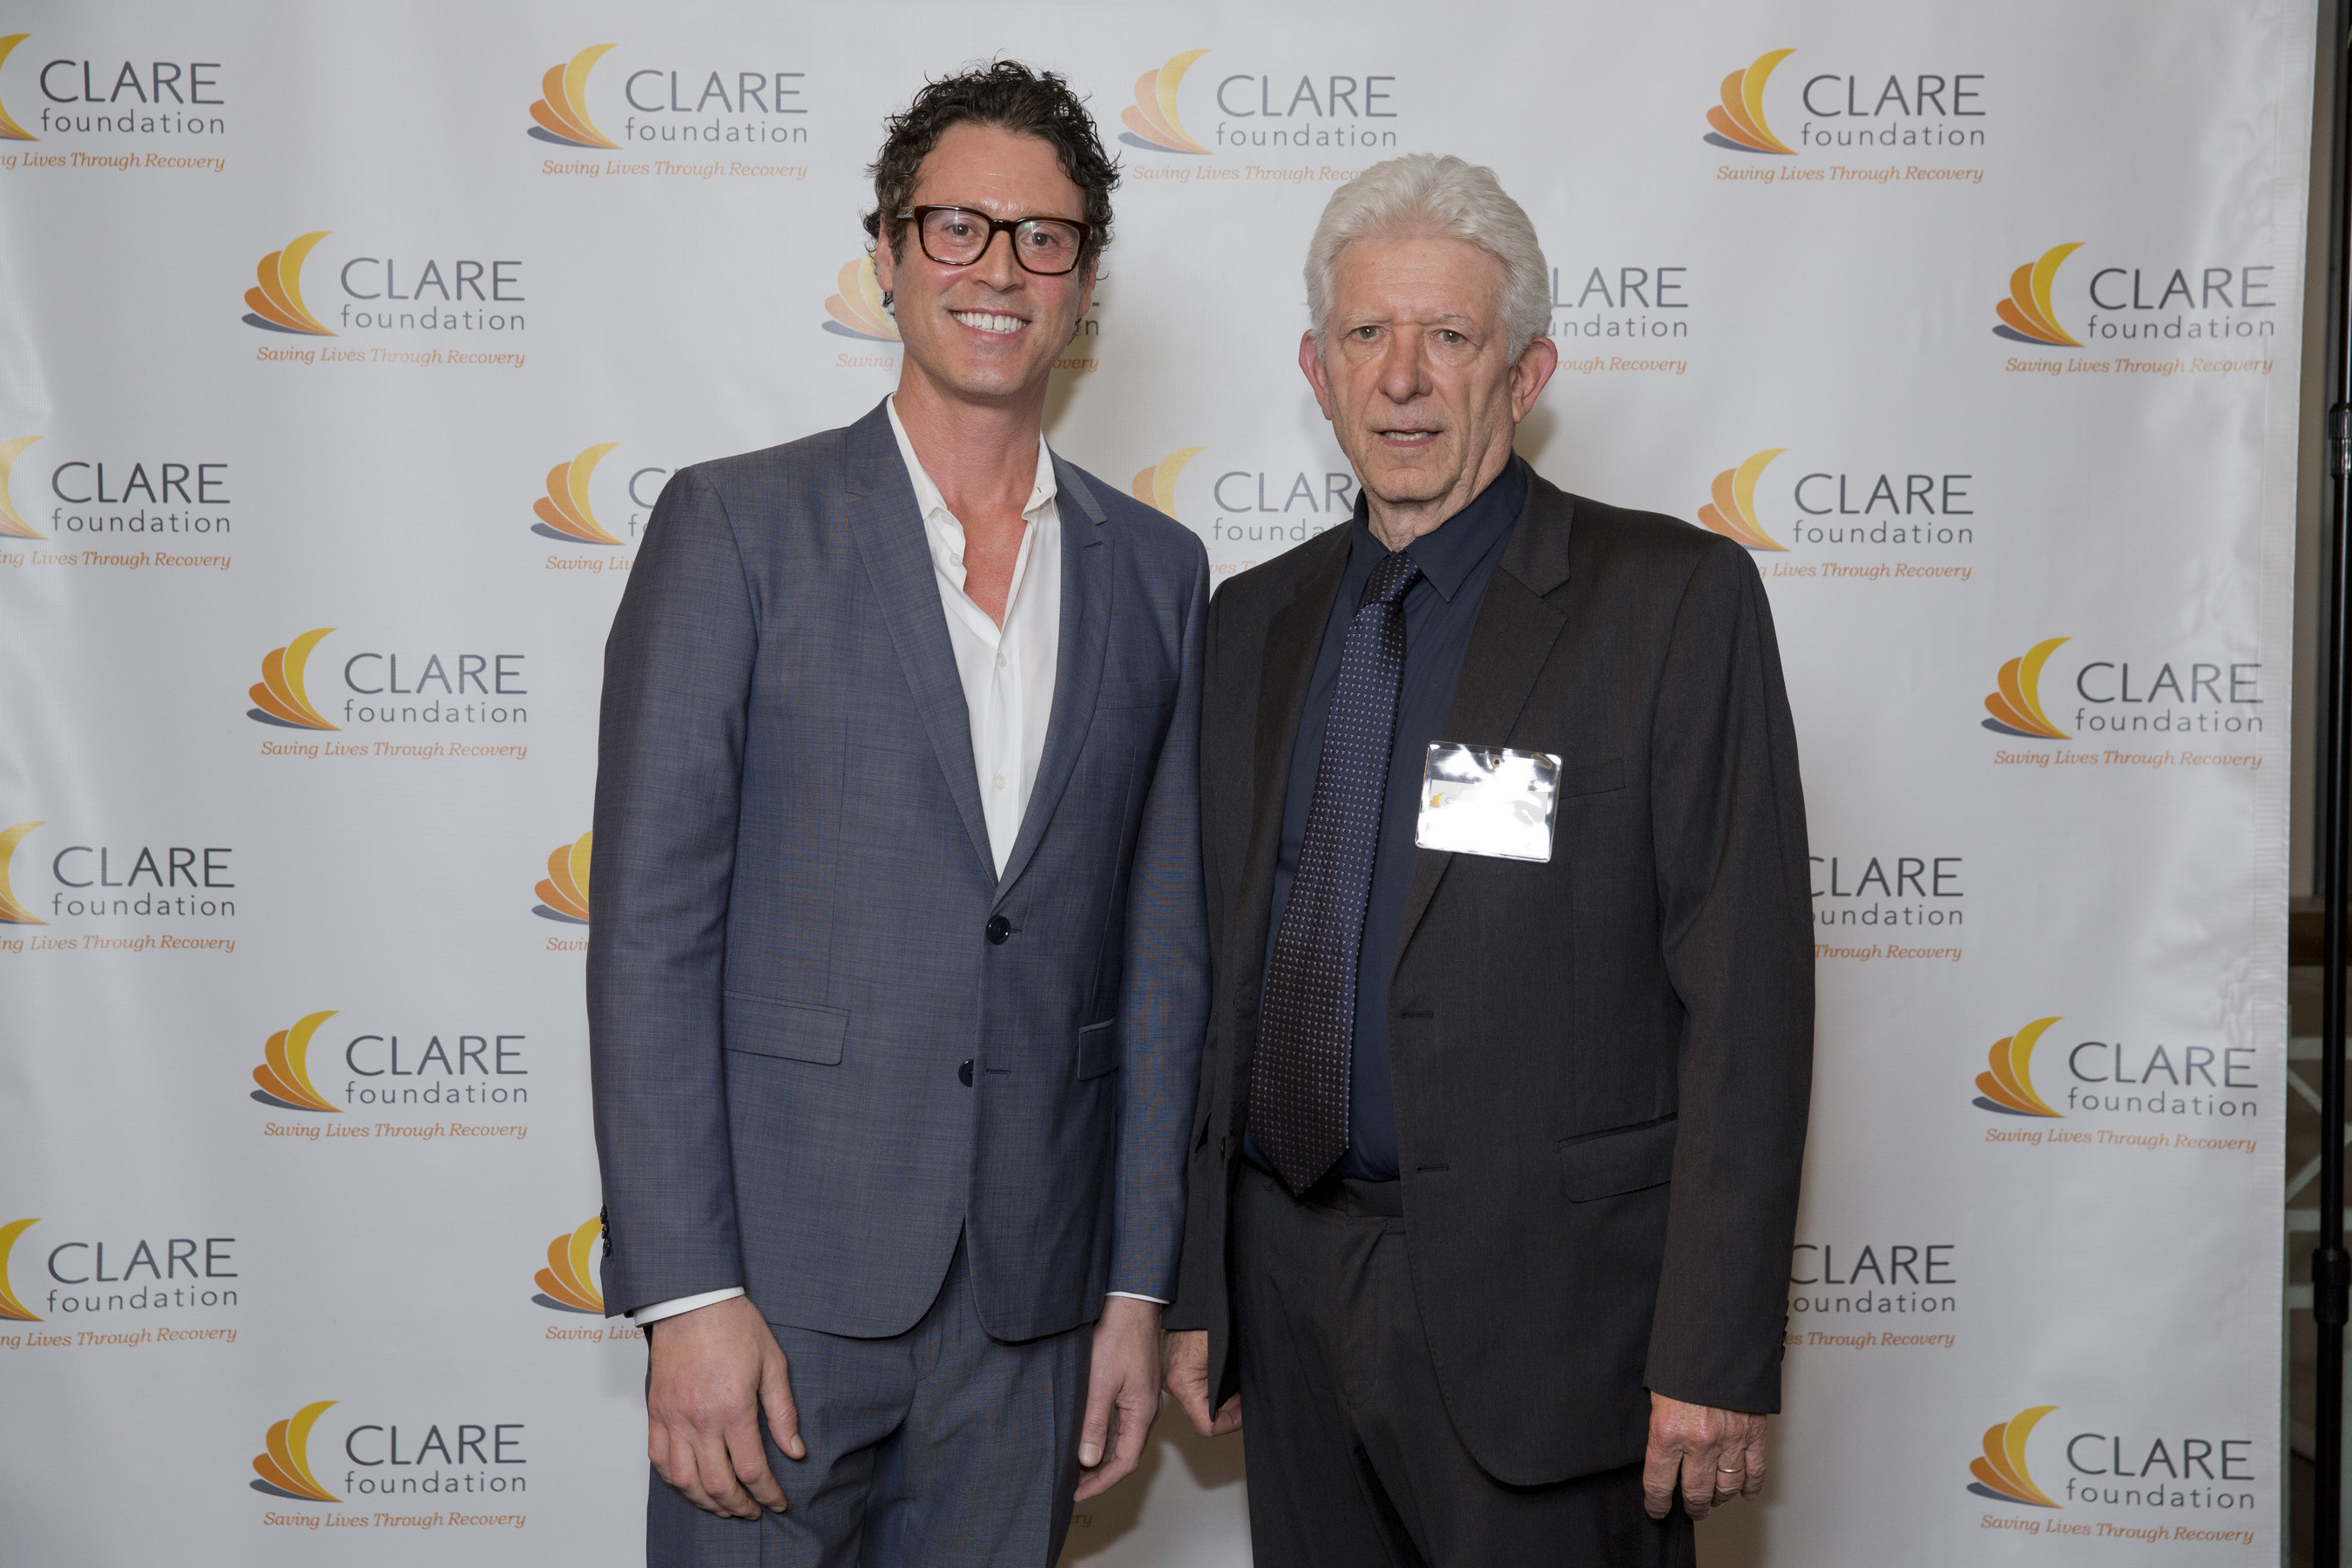 CLARE Client of the Year Award Honoree Craig Borten, CLARE Foundation Executive Director Nicholas Vrataric